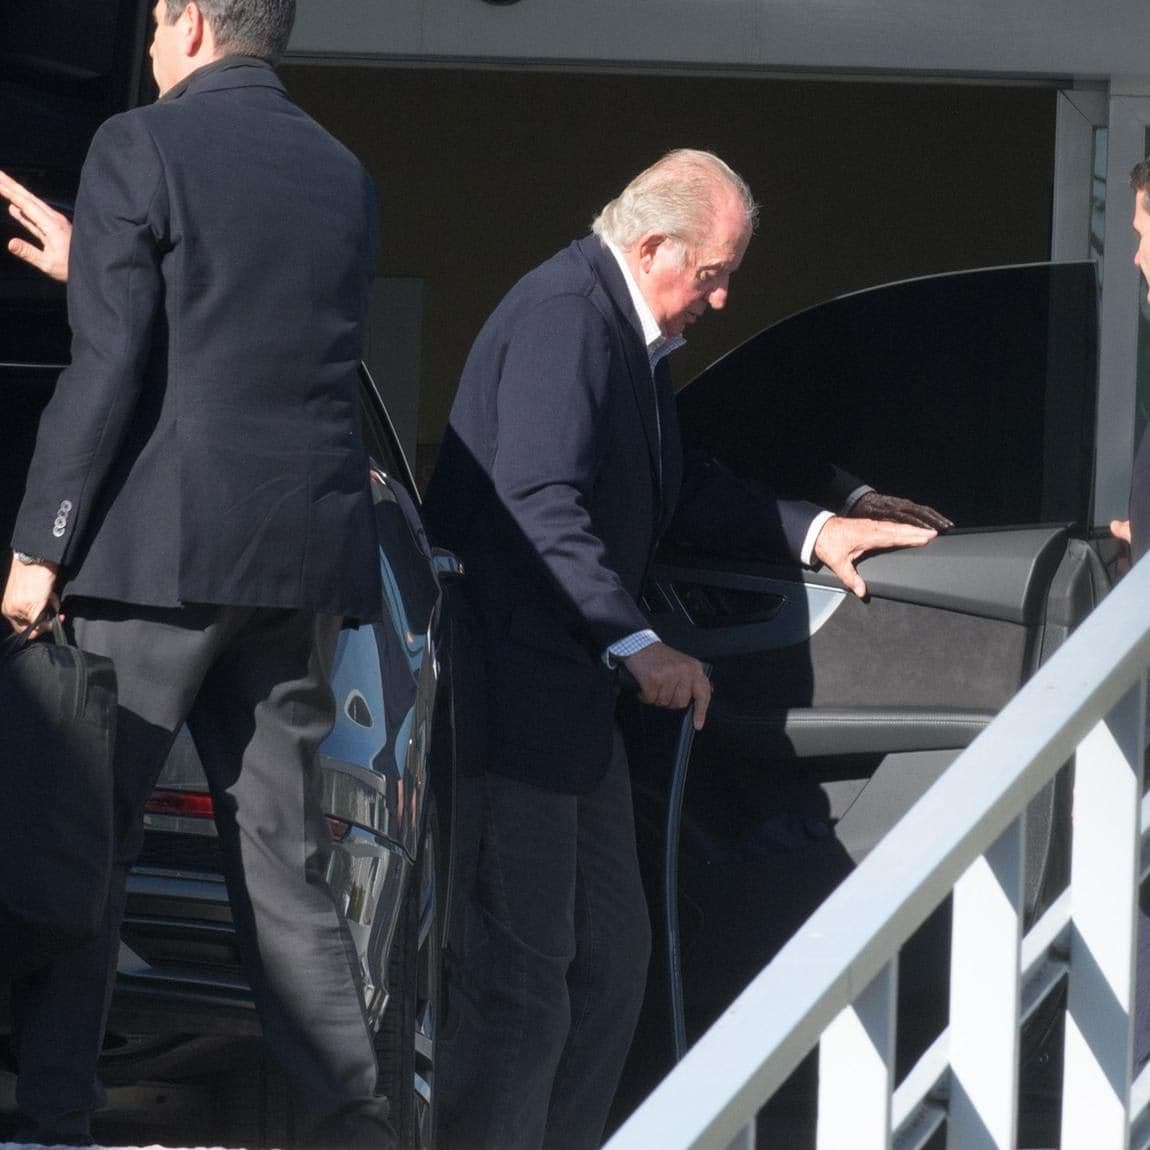 King Juan Carlos said goodbye to his sister before her death